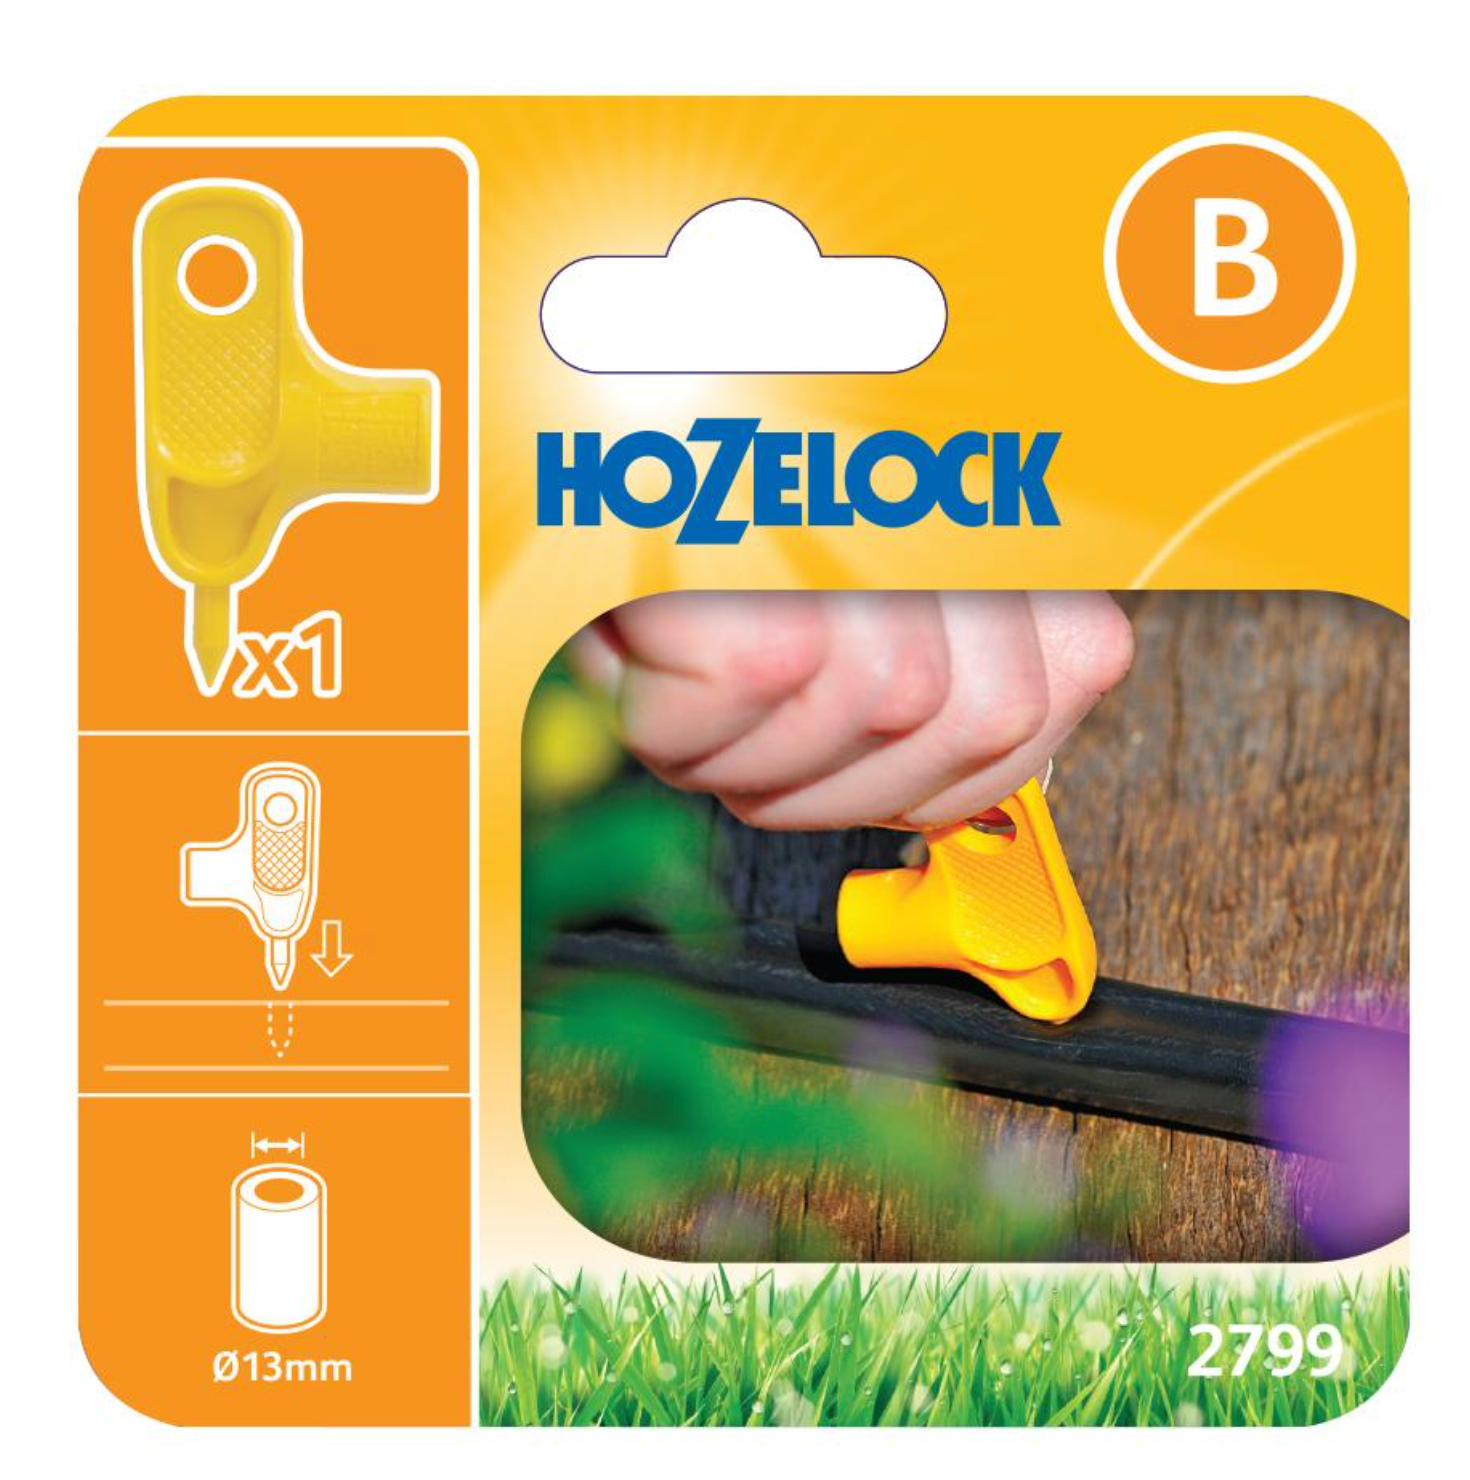 Hozelock 2799 Key Punch 4mm & 13mm - Pack of 1